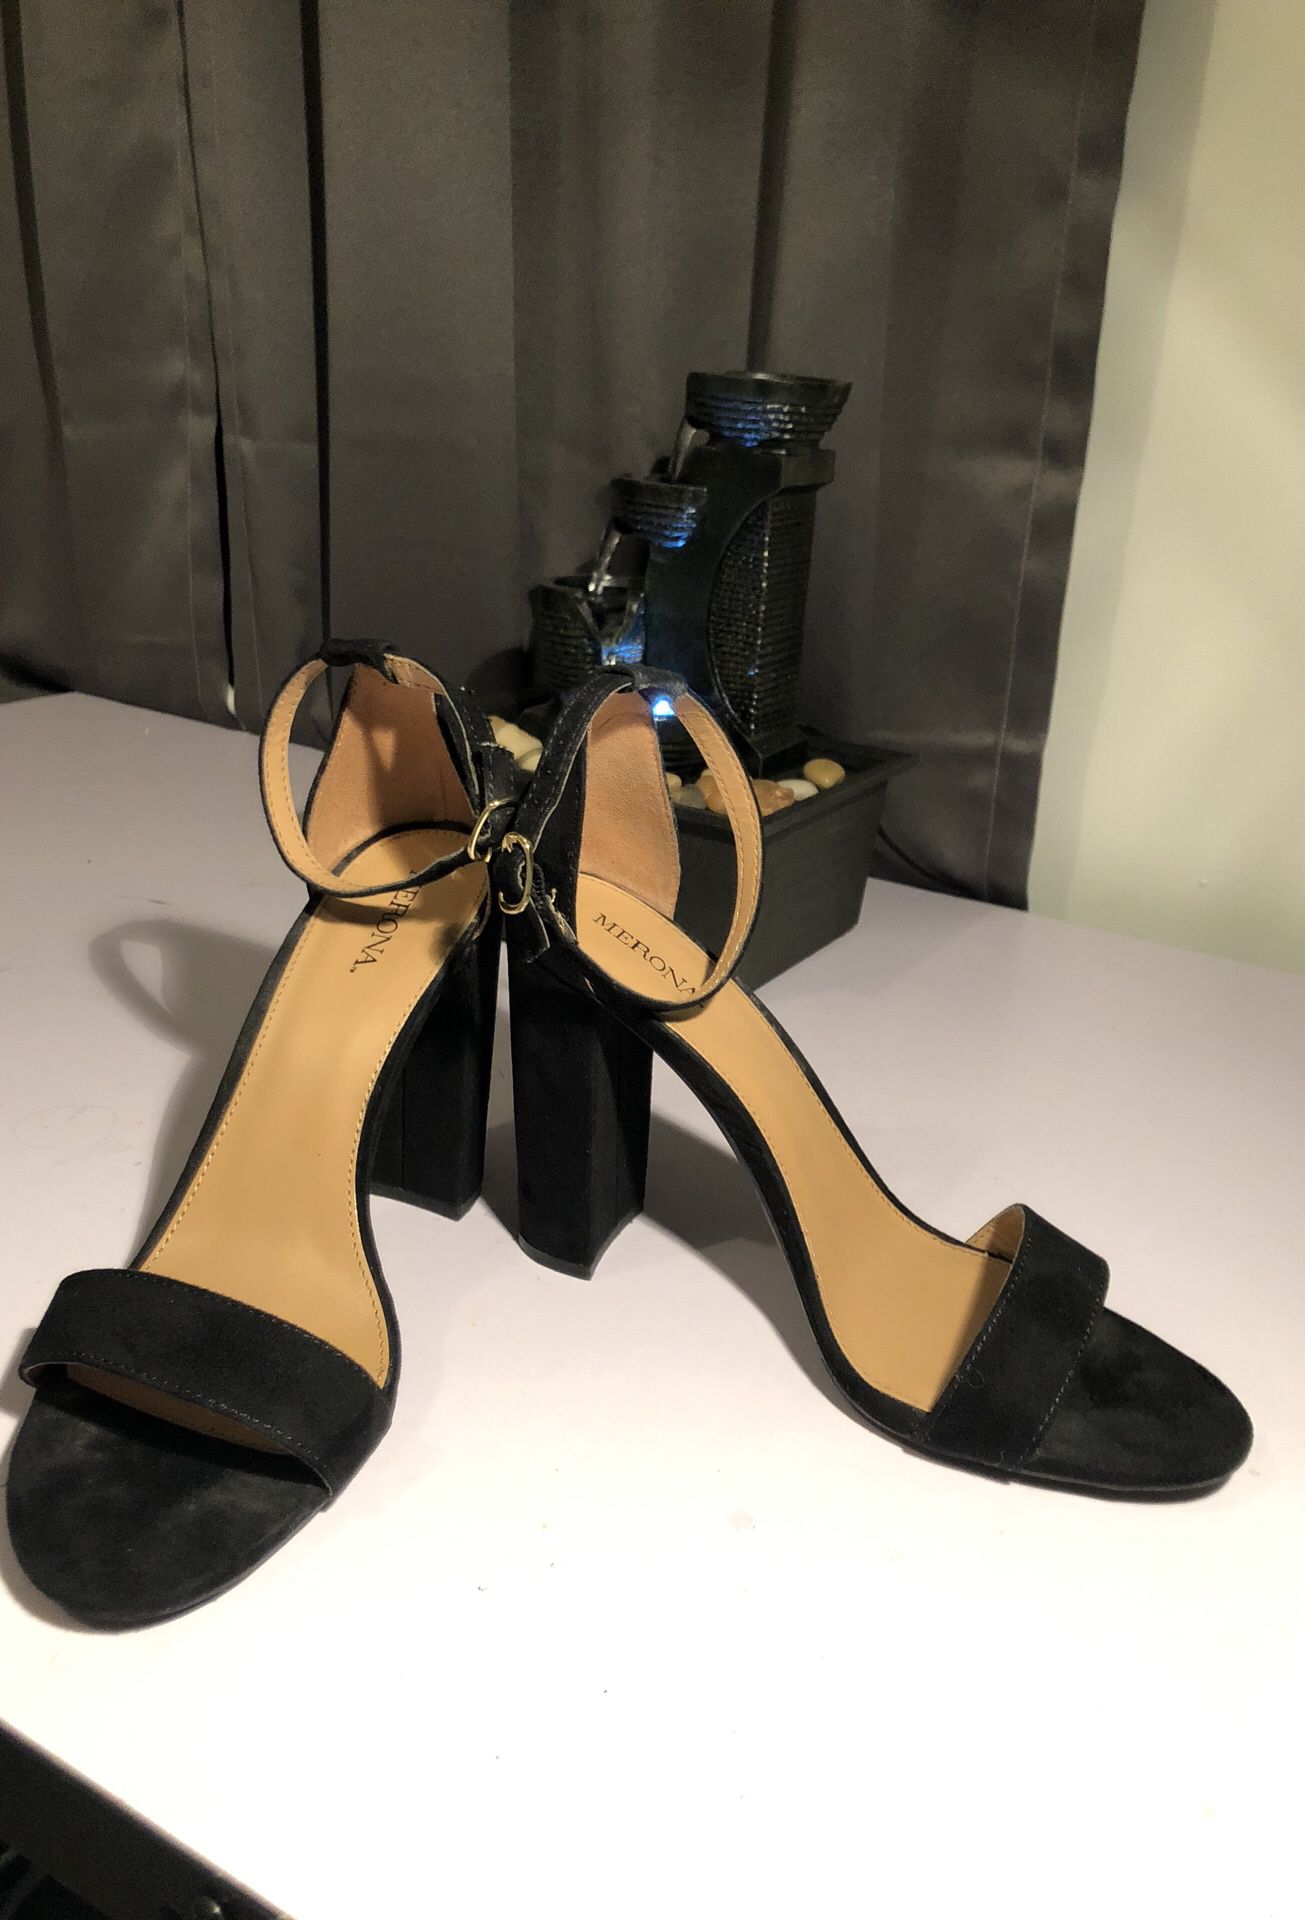 Black suede heels 4”